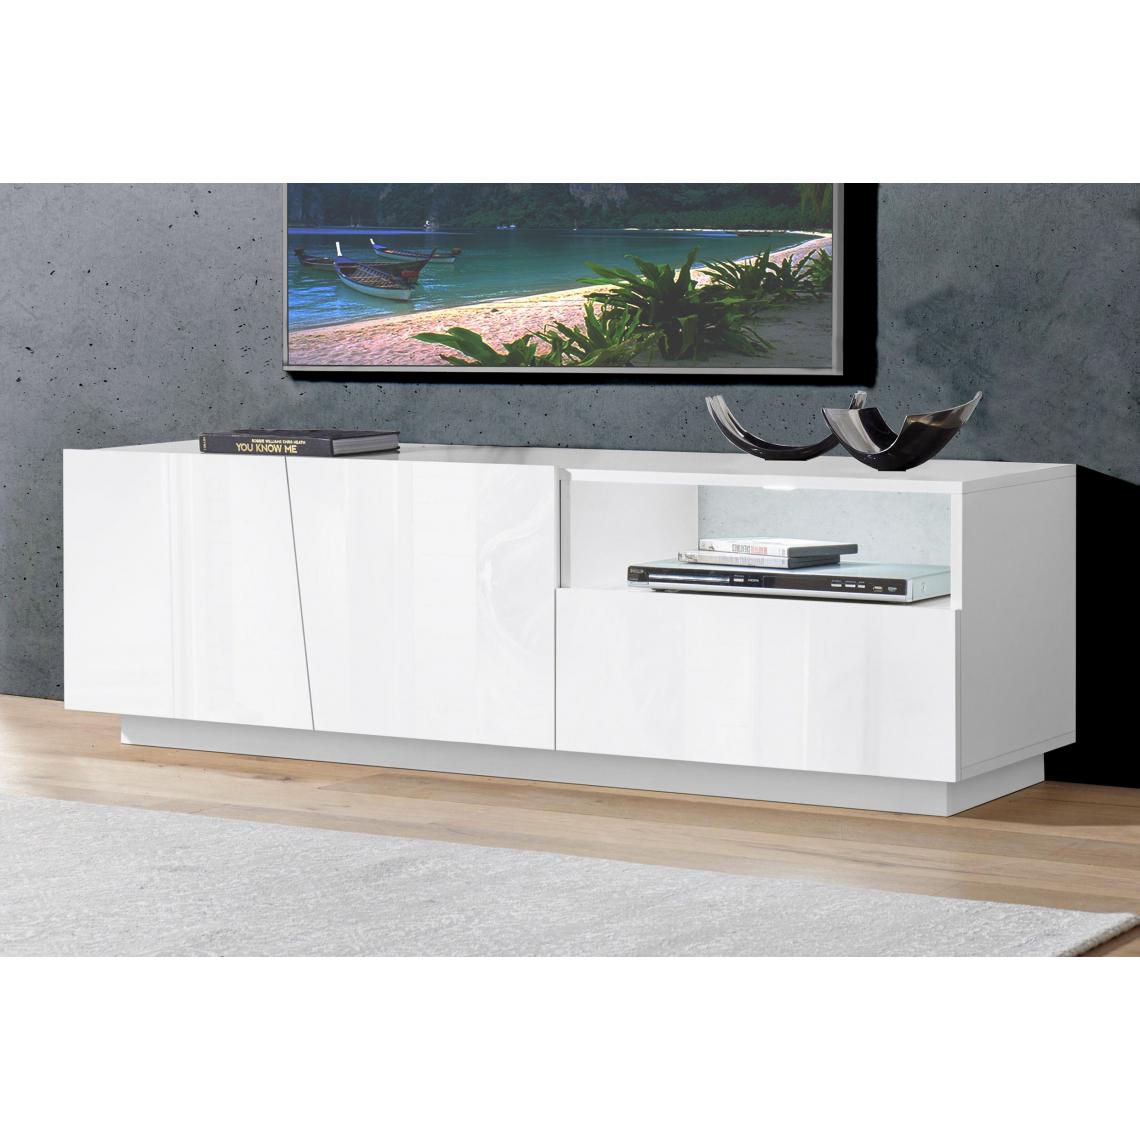 Alter - Meuble TV de salon, Made in Italy, Meuble TV avec 2 portes et 1 tiroir, cm 150x43h46, couleur blanc brillant - Meubles TV, Hi-Fi